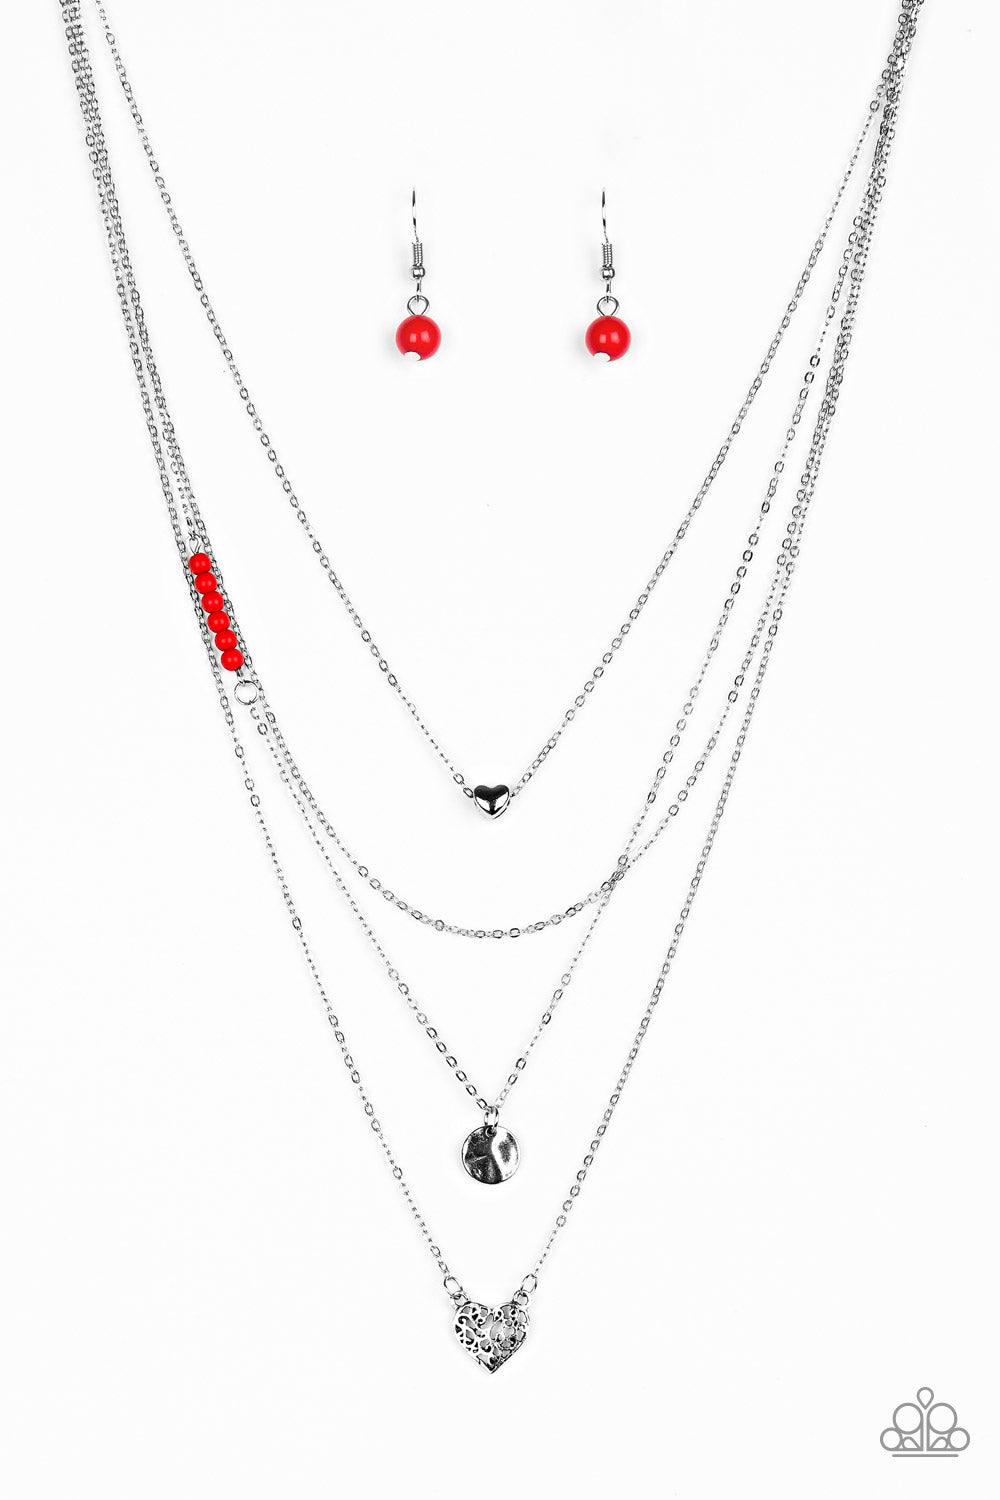 Gypsy Heart Red (Silver Heart) Necklace freeshipping - JewLz4u Gemstone Gallery